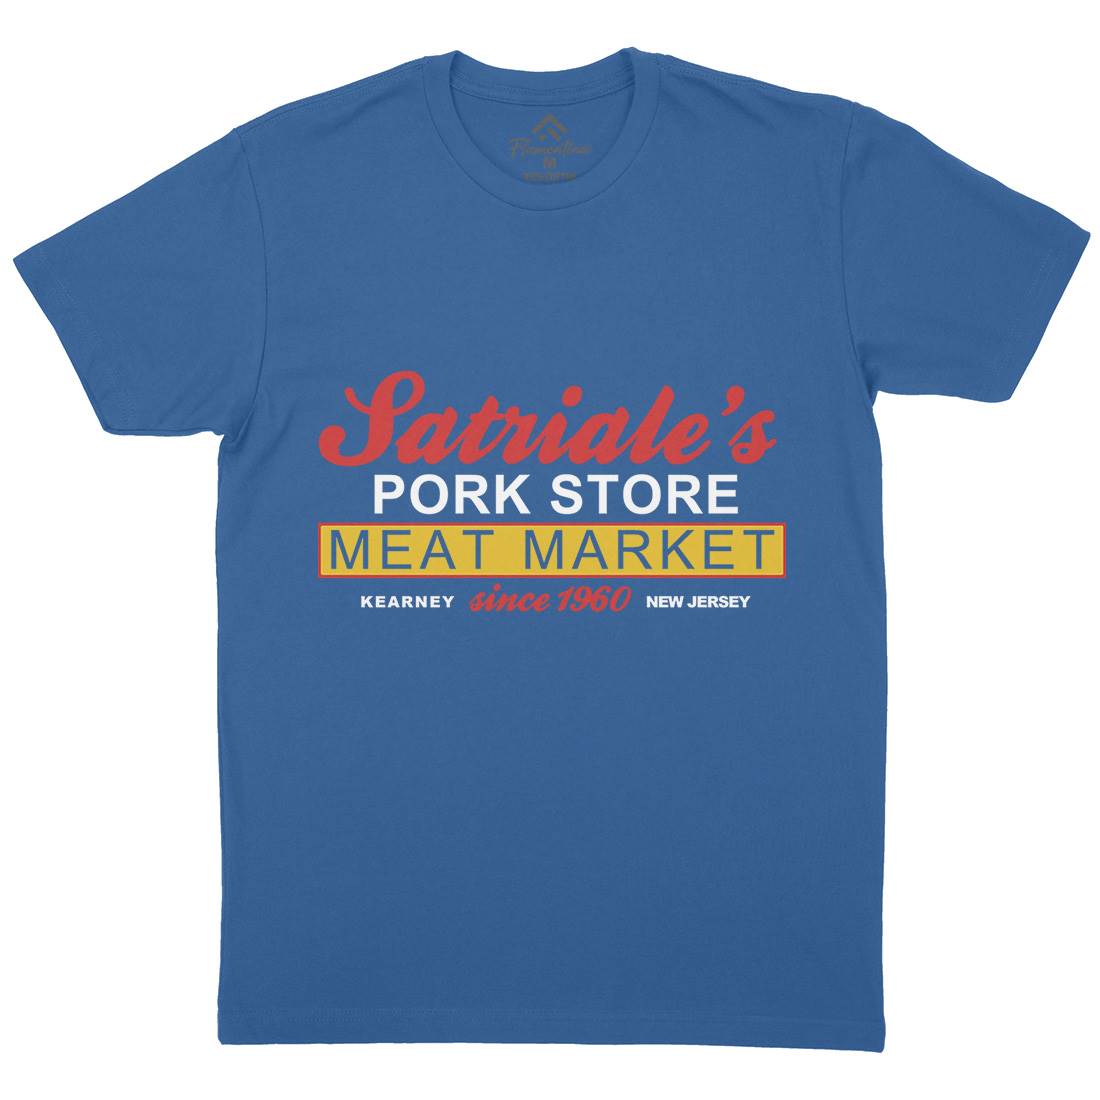 Satriale Meat Store Mens Crew Neck T-Shirt Food D115